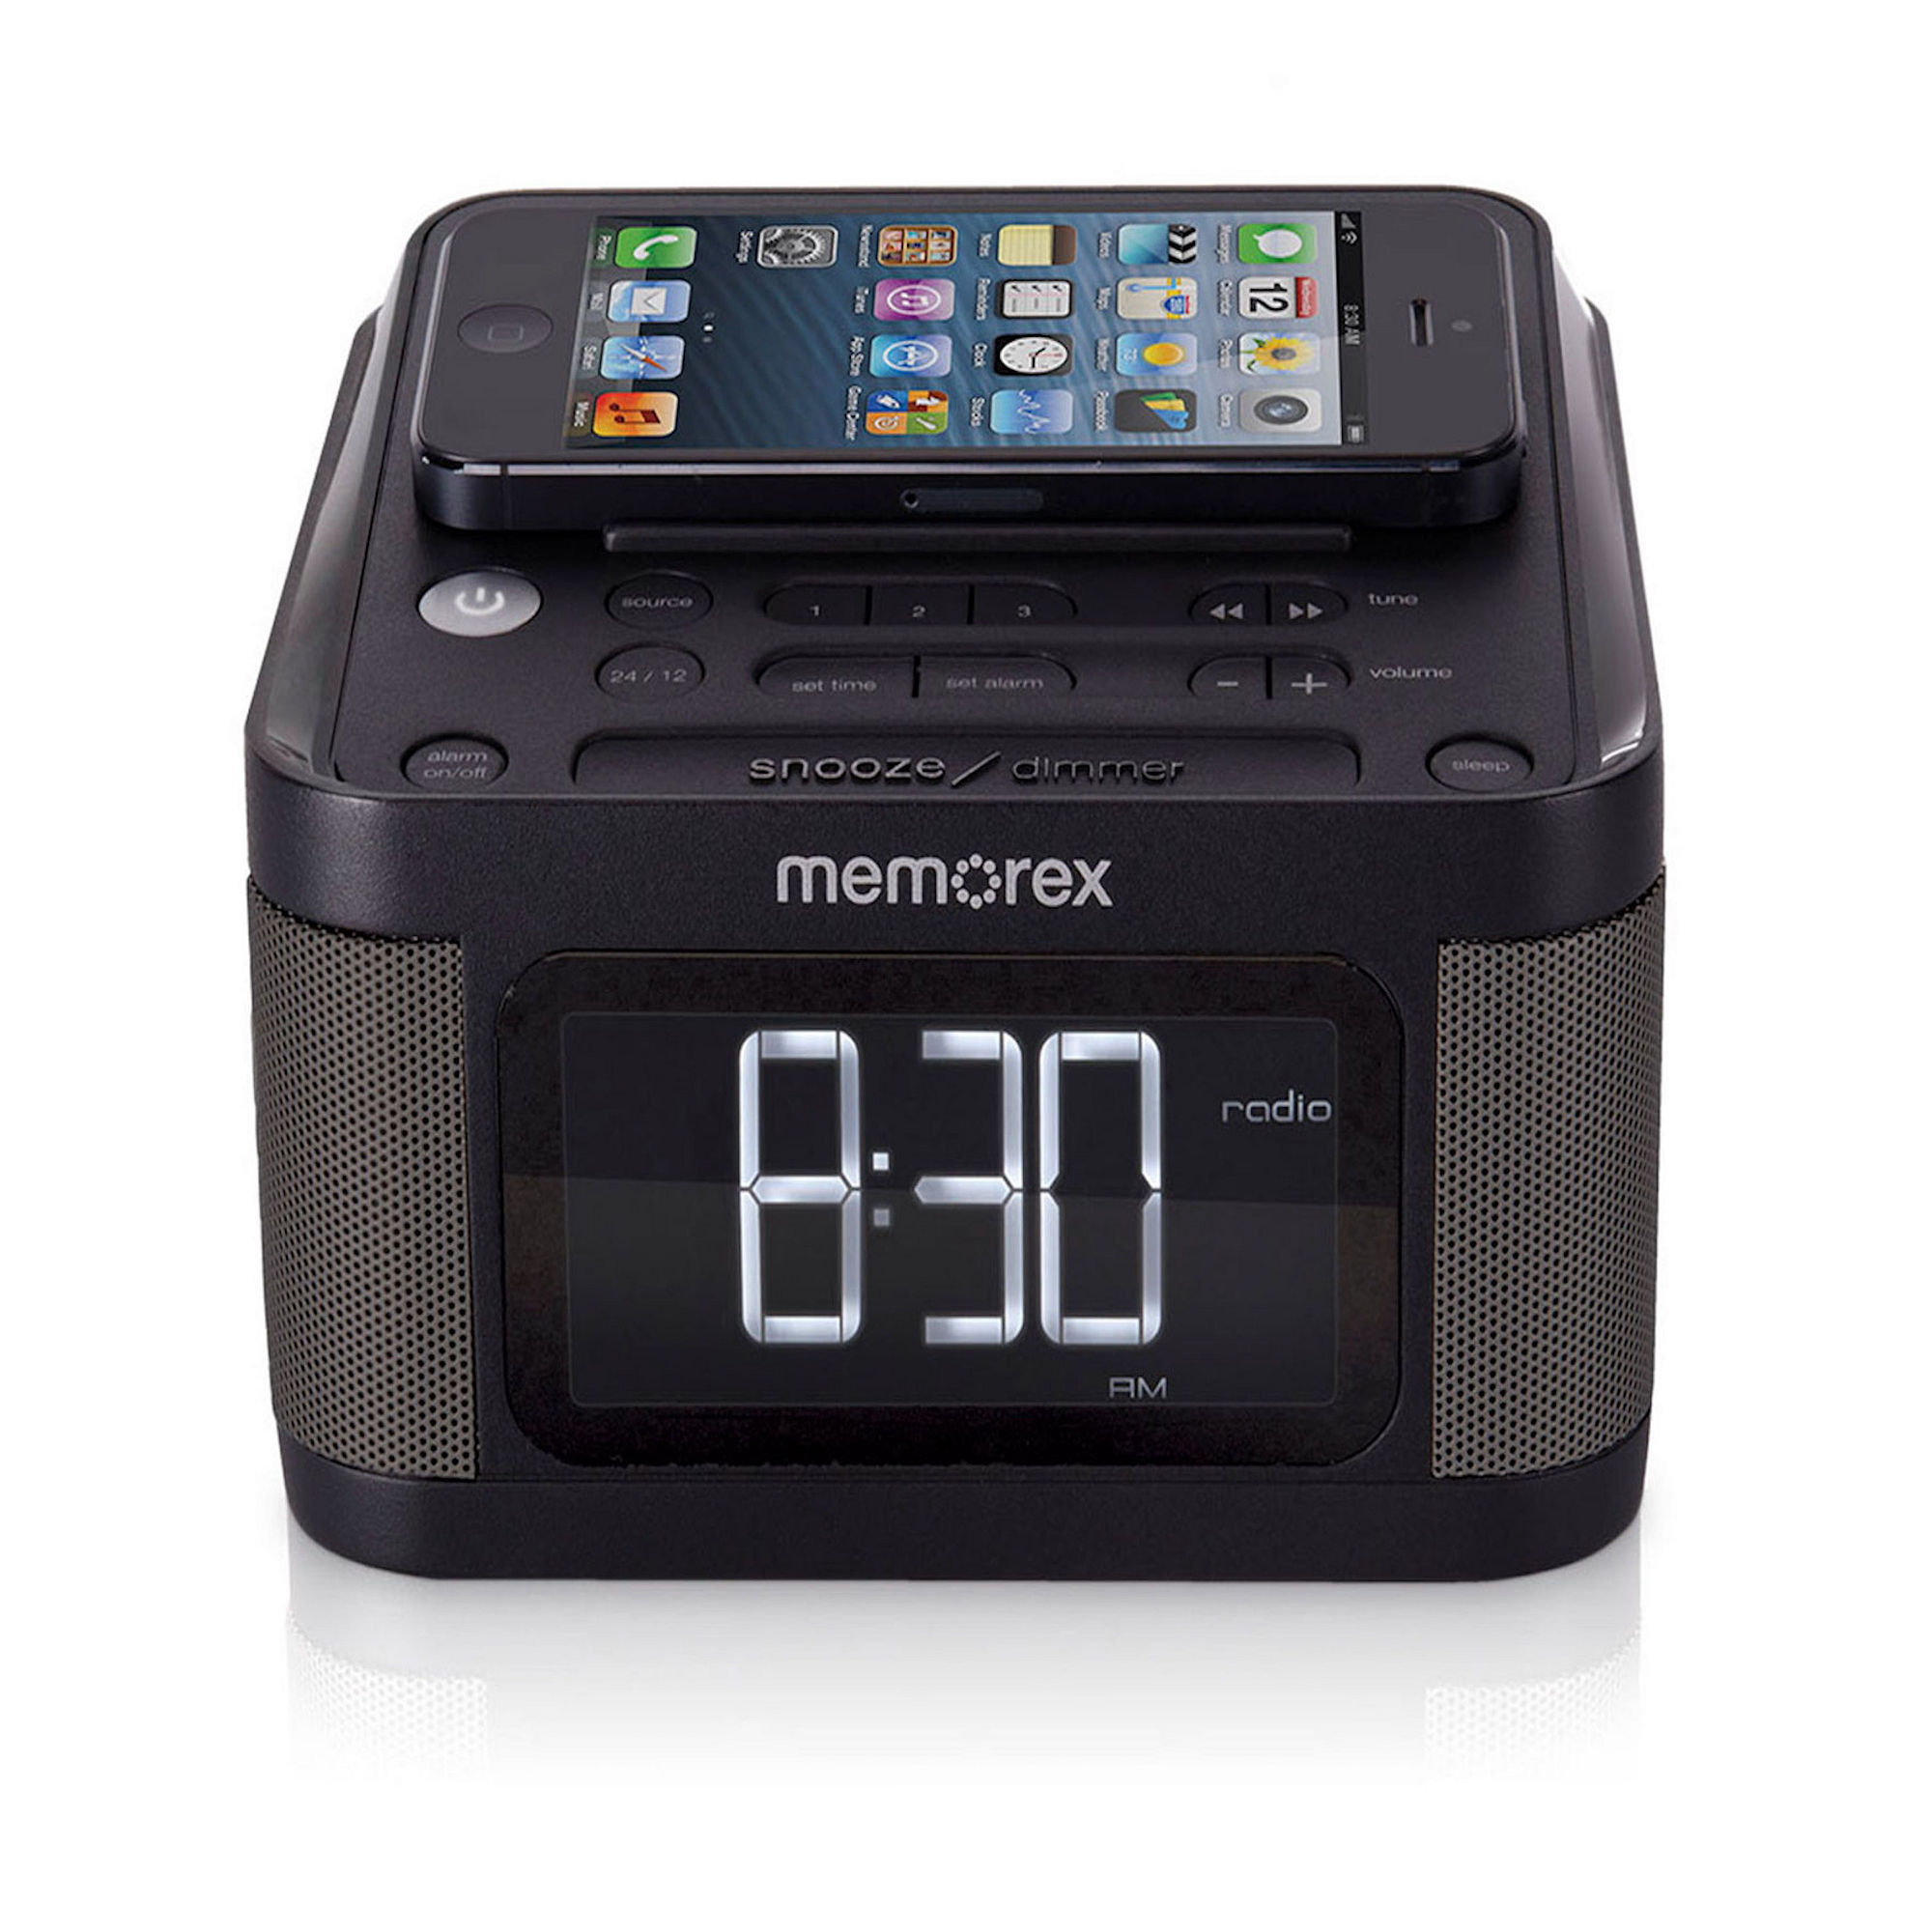 Memorex MC8431 Alarm Clock with Dual USB Ports